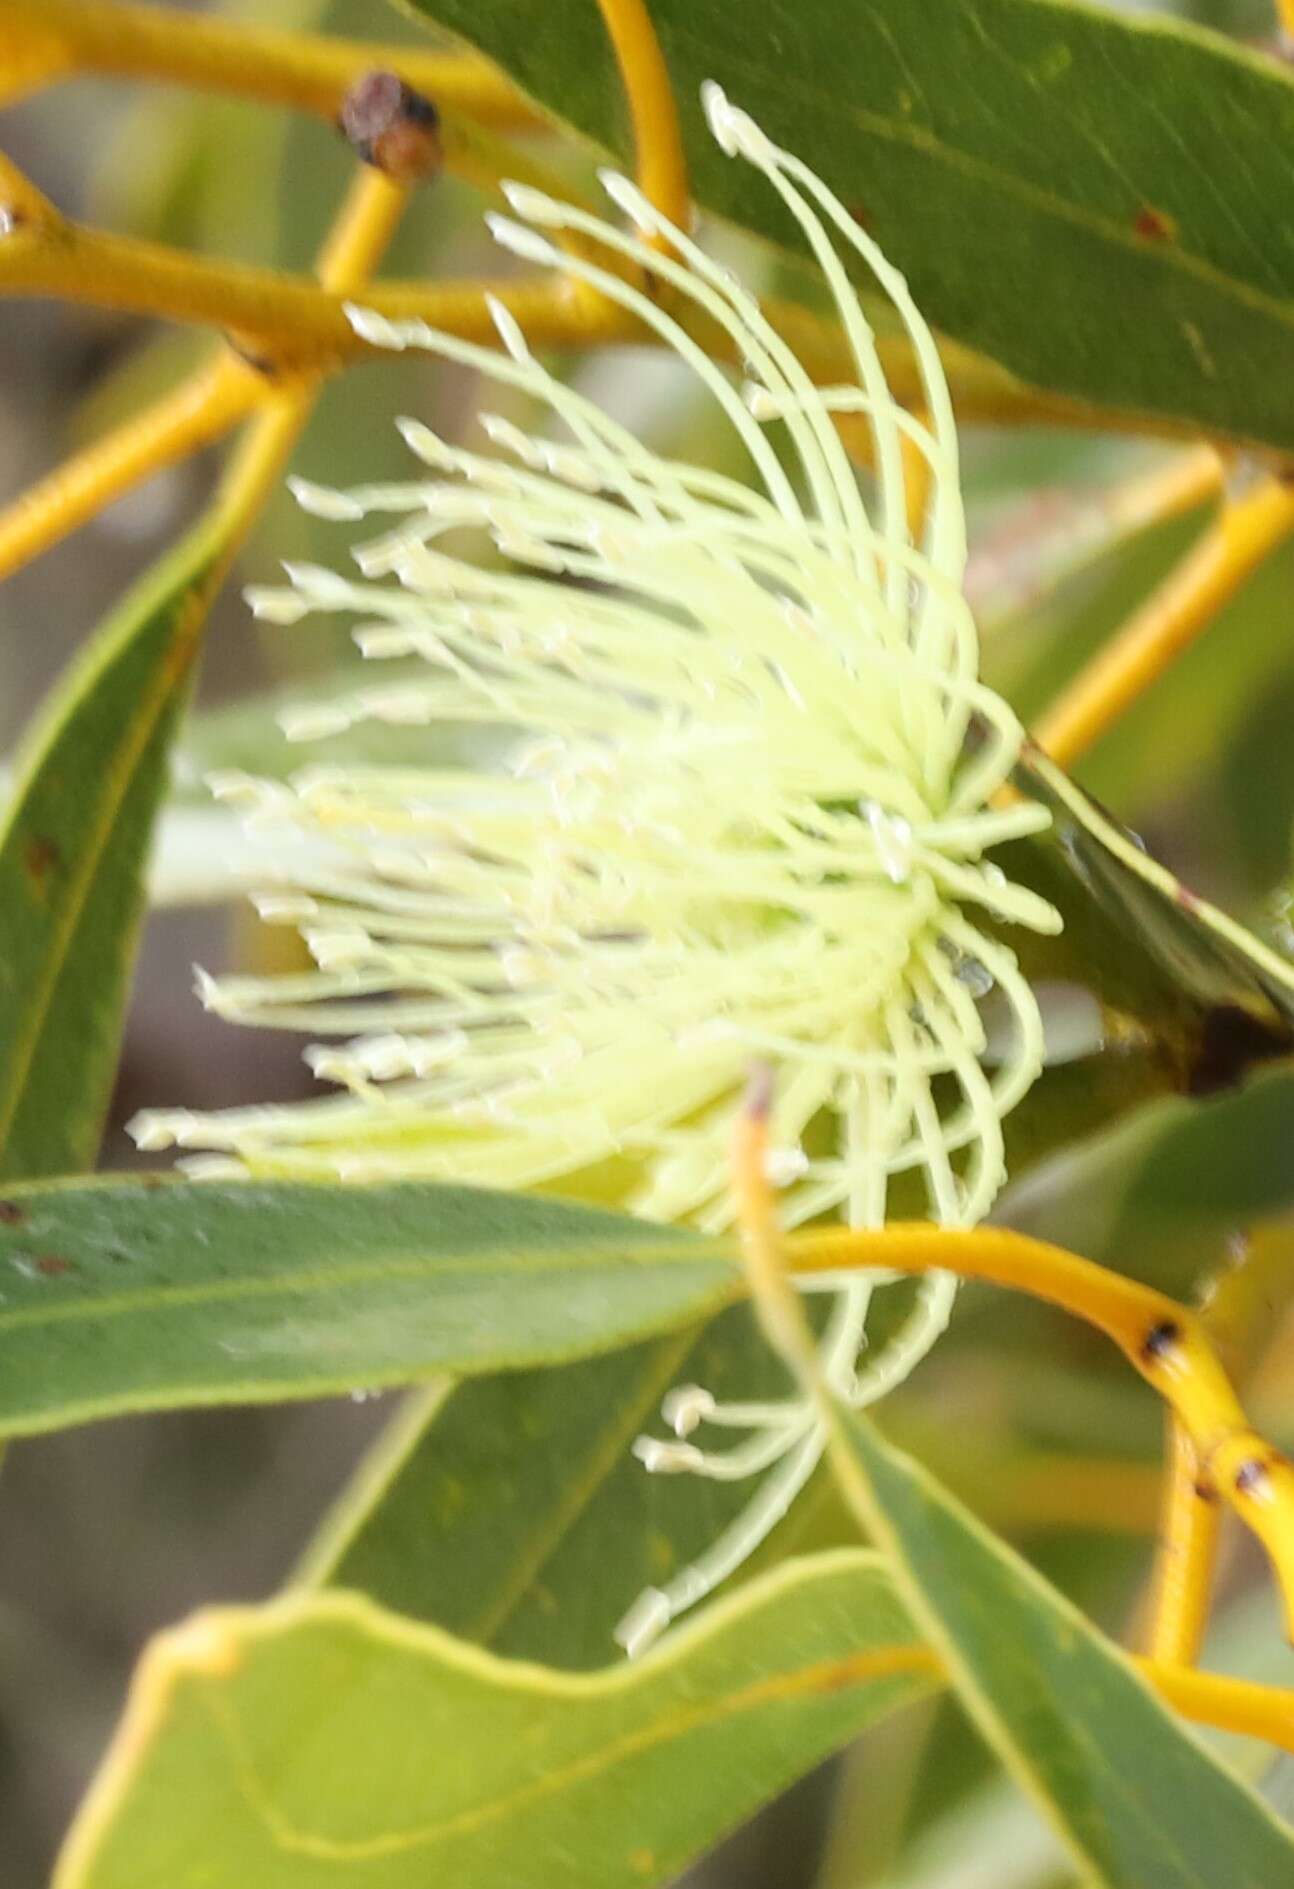 Image of Eucalyptus diminuta Brooker & Hopper